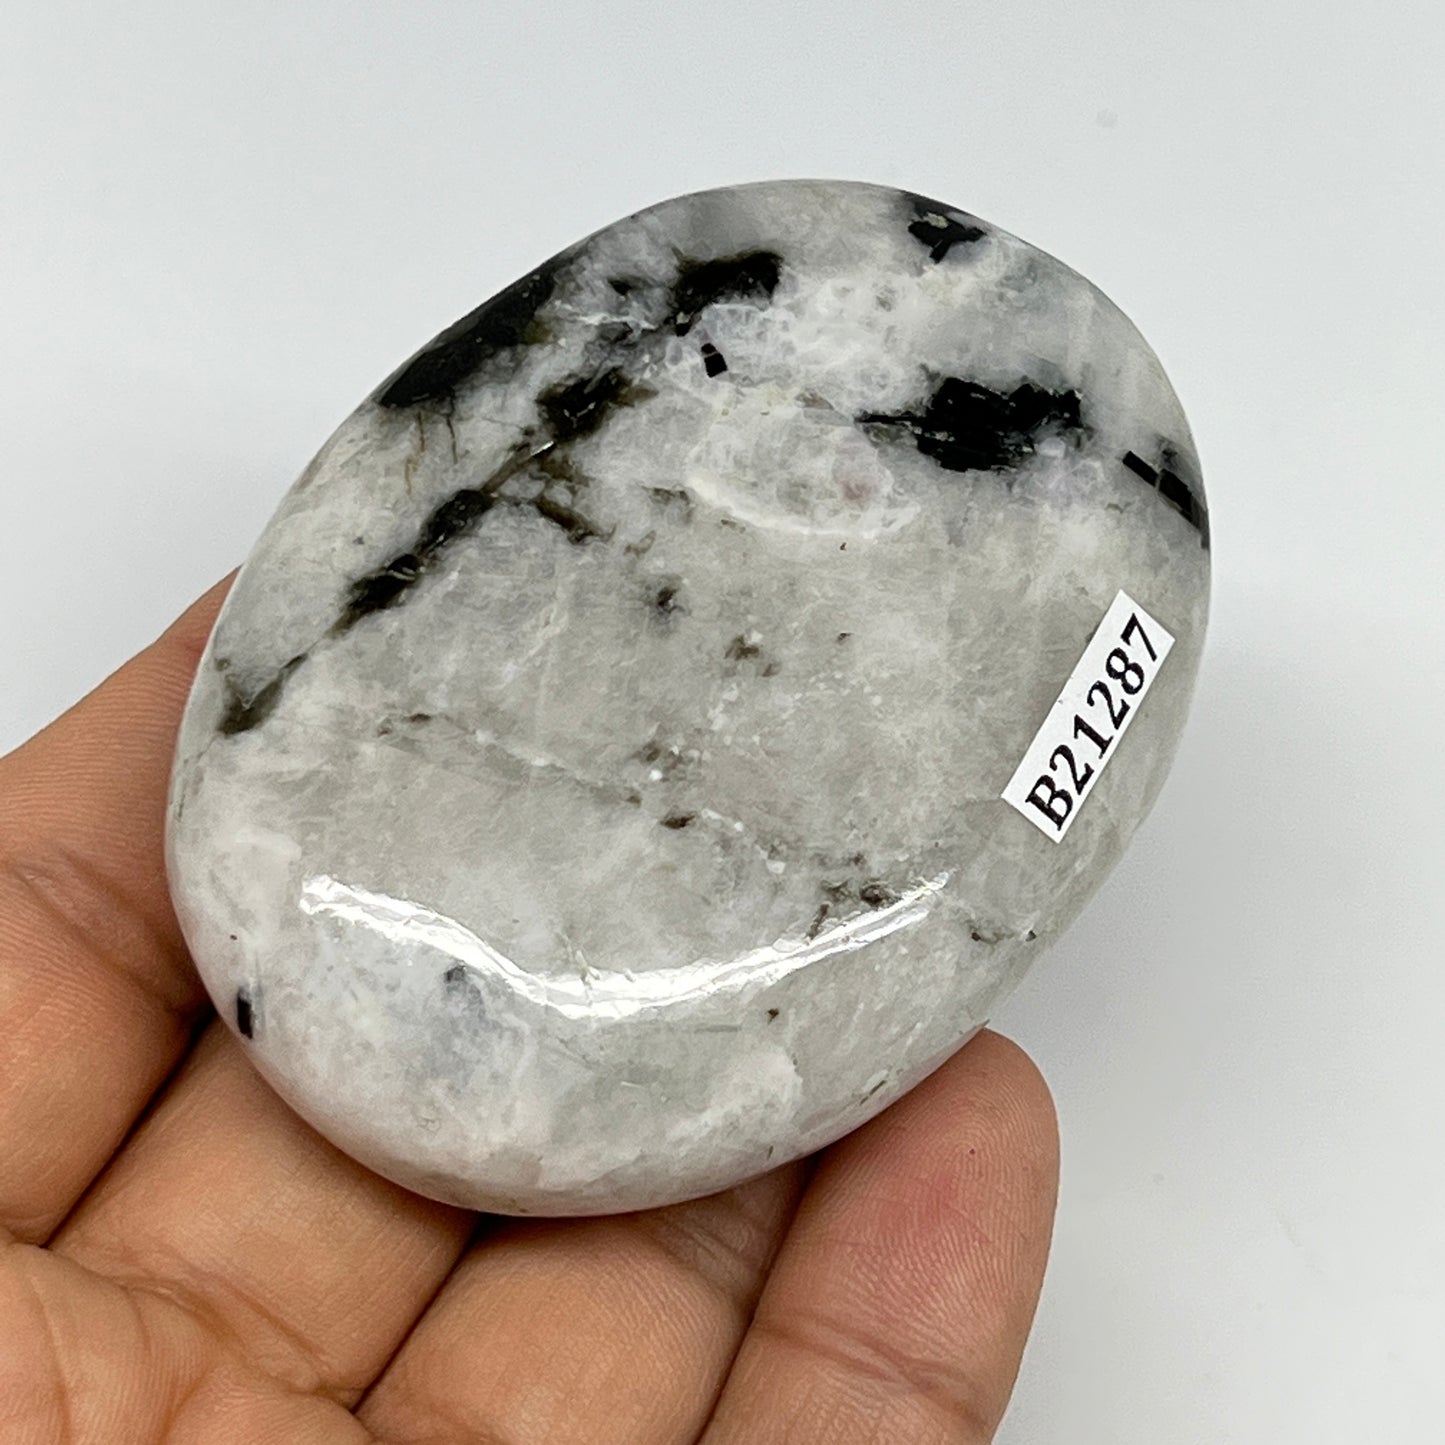 114.3g,2.7"x2"x0.8", Rainbow Moonstone Palm-Stone Polished from India, B21287